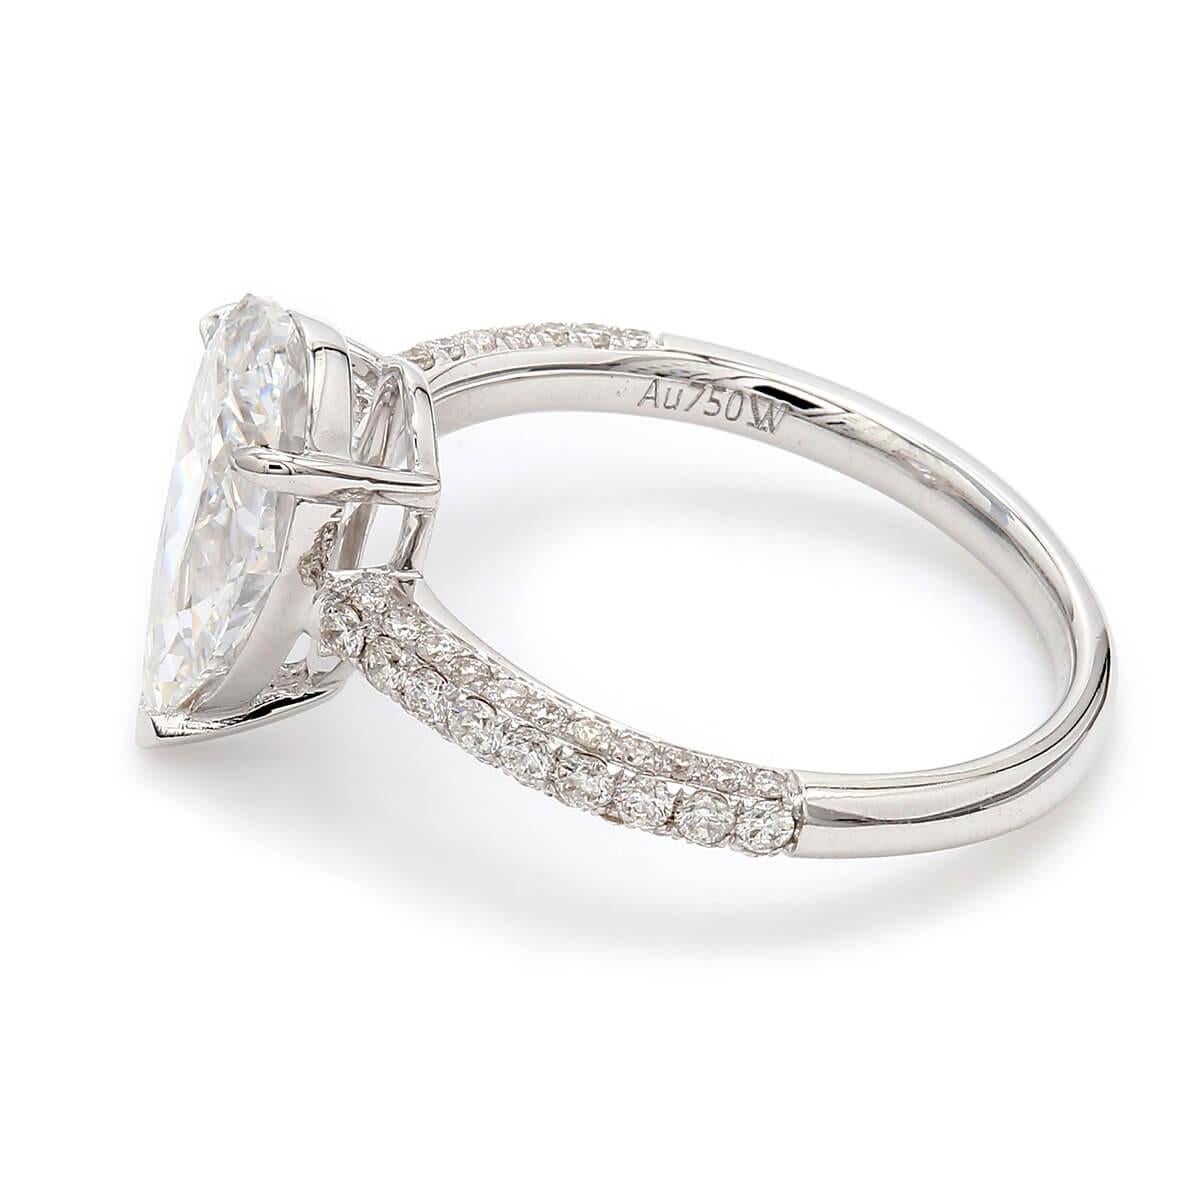 WHITE GOLD PEAR CUT DIAMOND RING - 2.45 CT


Set in 18K White gold


Total pear cut diamond weight: 2.01 ct
[ 1 diamond ]
Color: D
Clarity: VS2

Total side diamond weight: 0.44 ct
[ 62 diamonds ]
Color: G-H
Clarity: VS

Total ring weight: 3.42